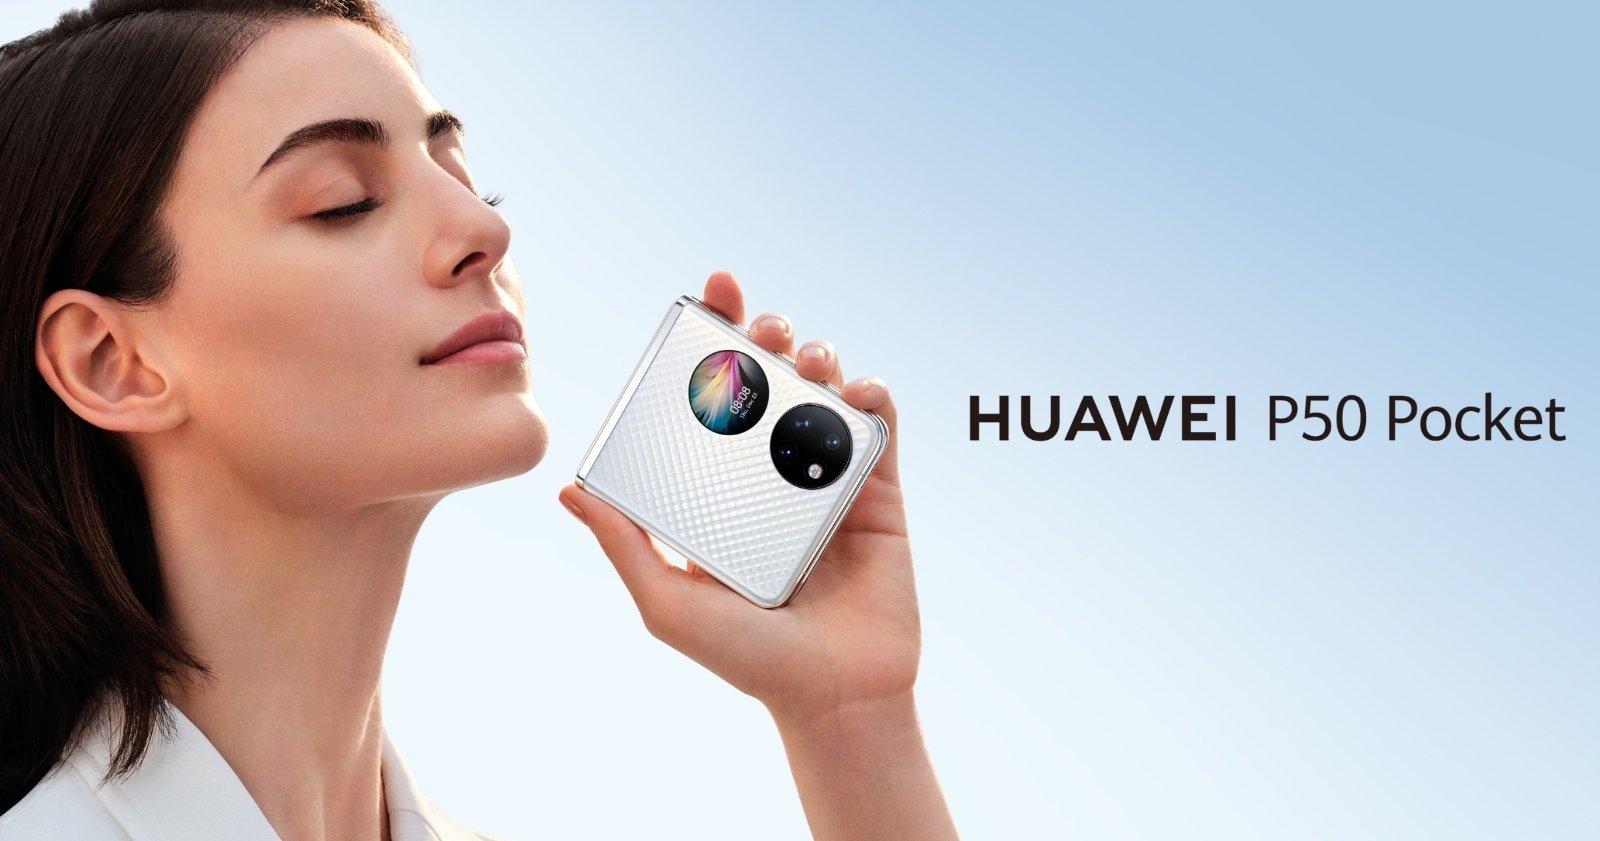 Huawei P50 Pocket, imagen oficial